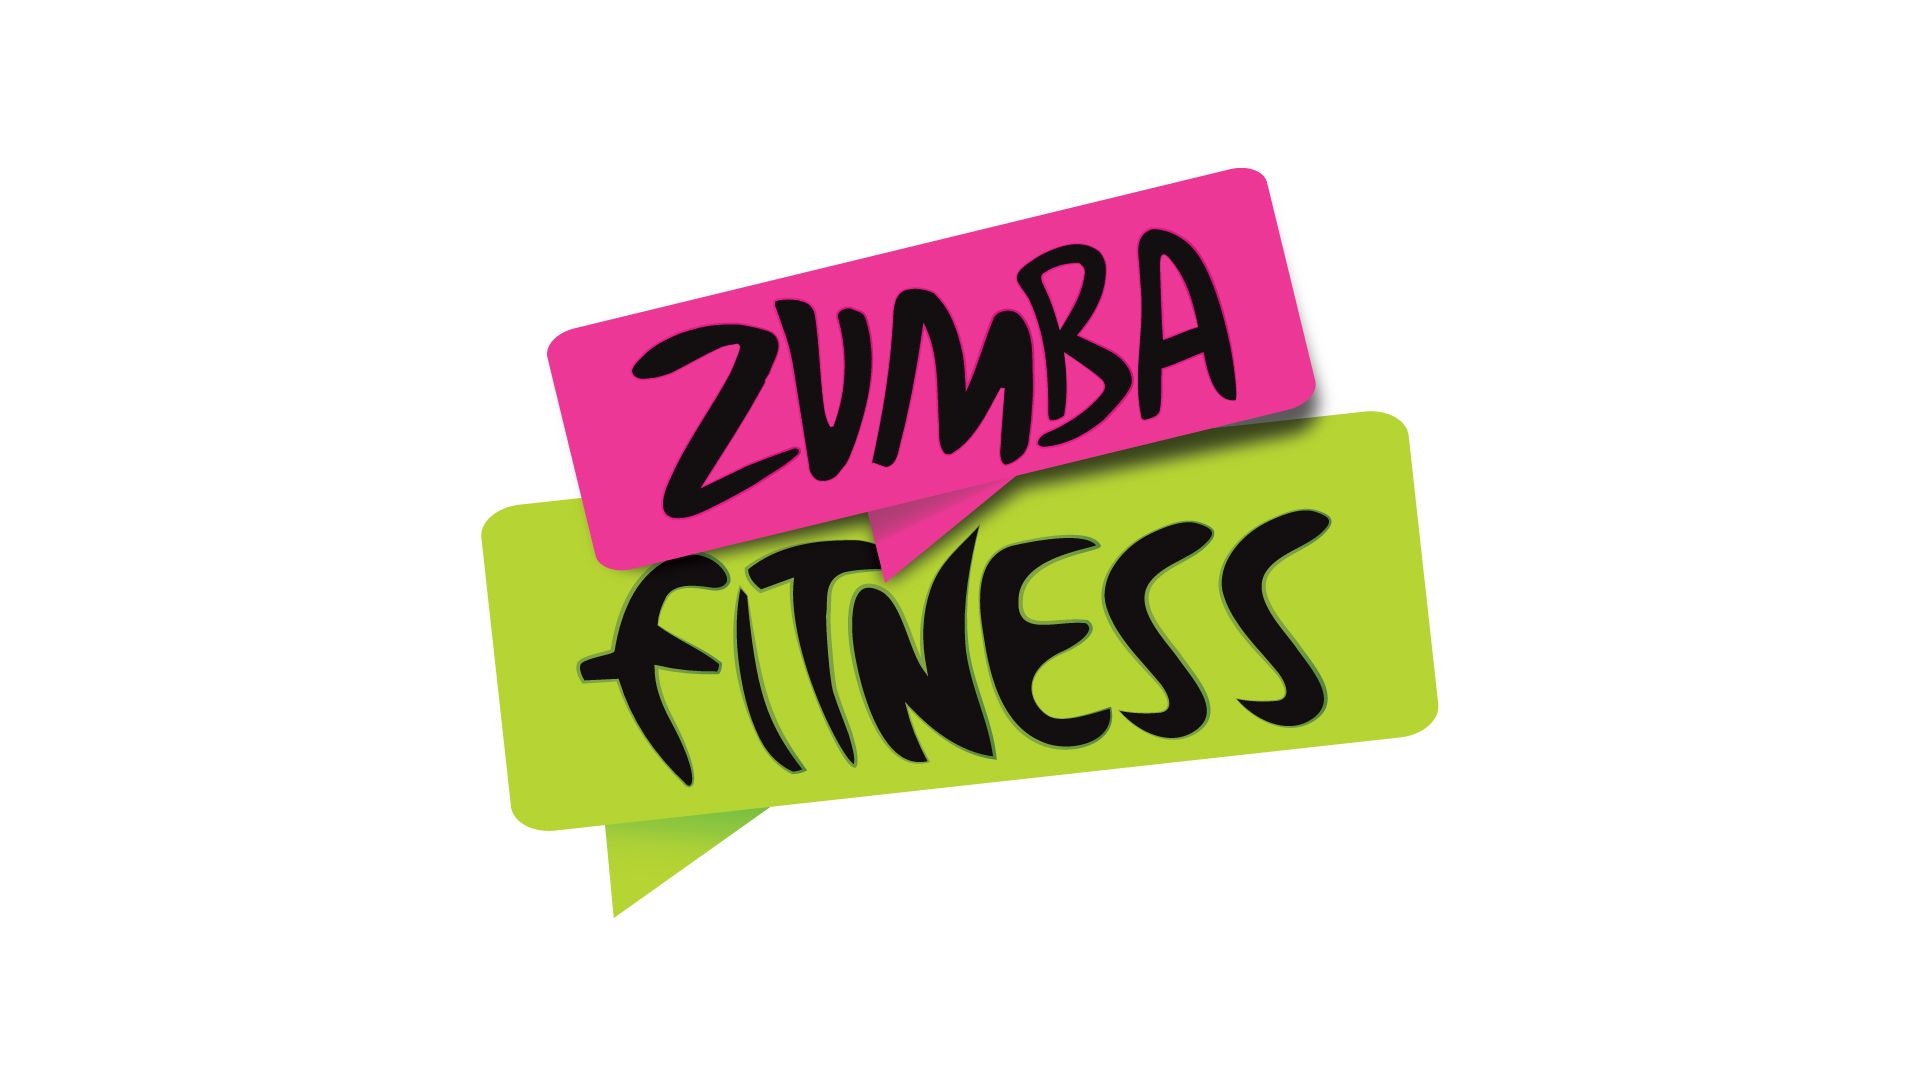 Zumba sports, Fitness dance, Dynamic backgrounds, Active lifestyle, 1920x1080 Full HD Desktop